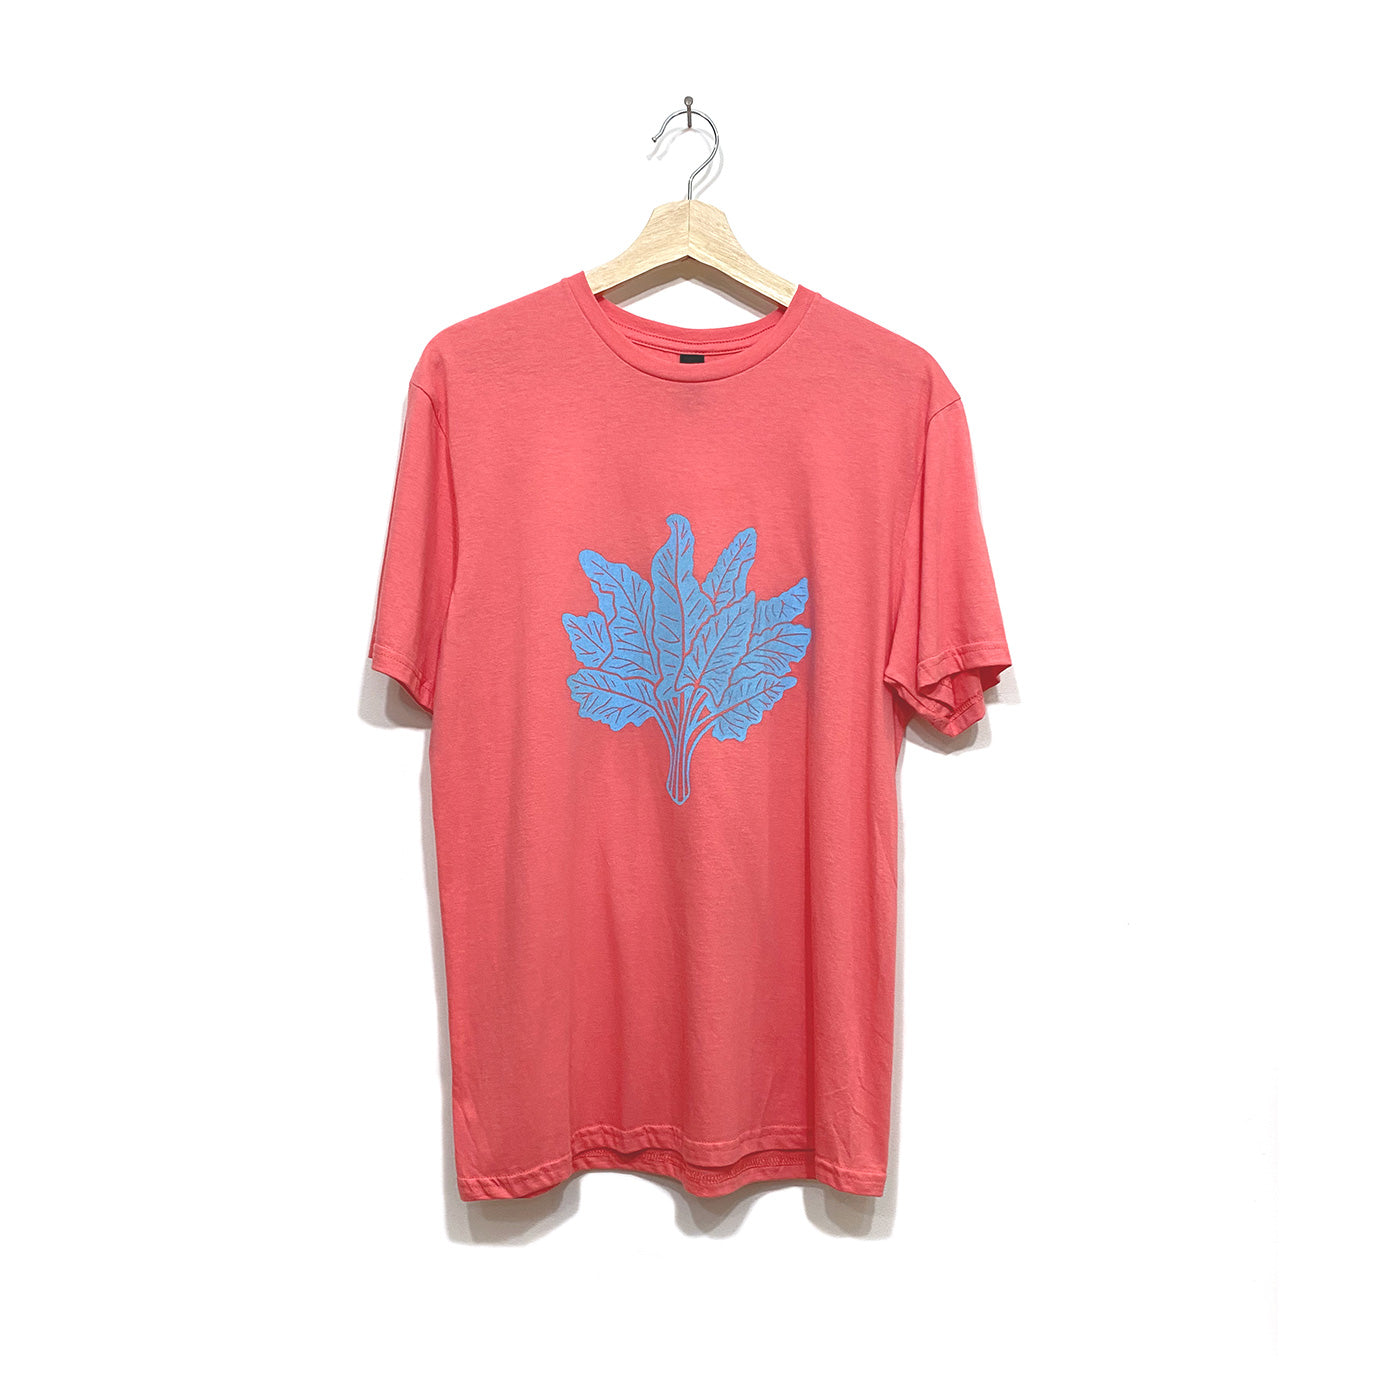 Blue Swiss Chard on Coral T-Shirt